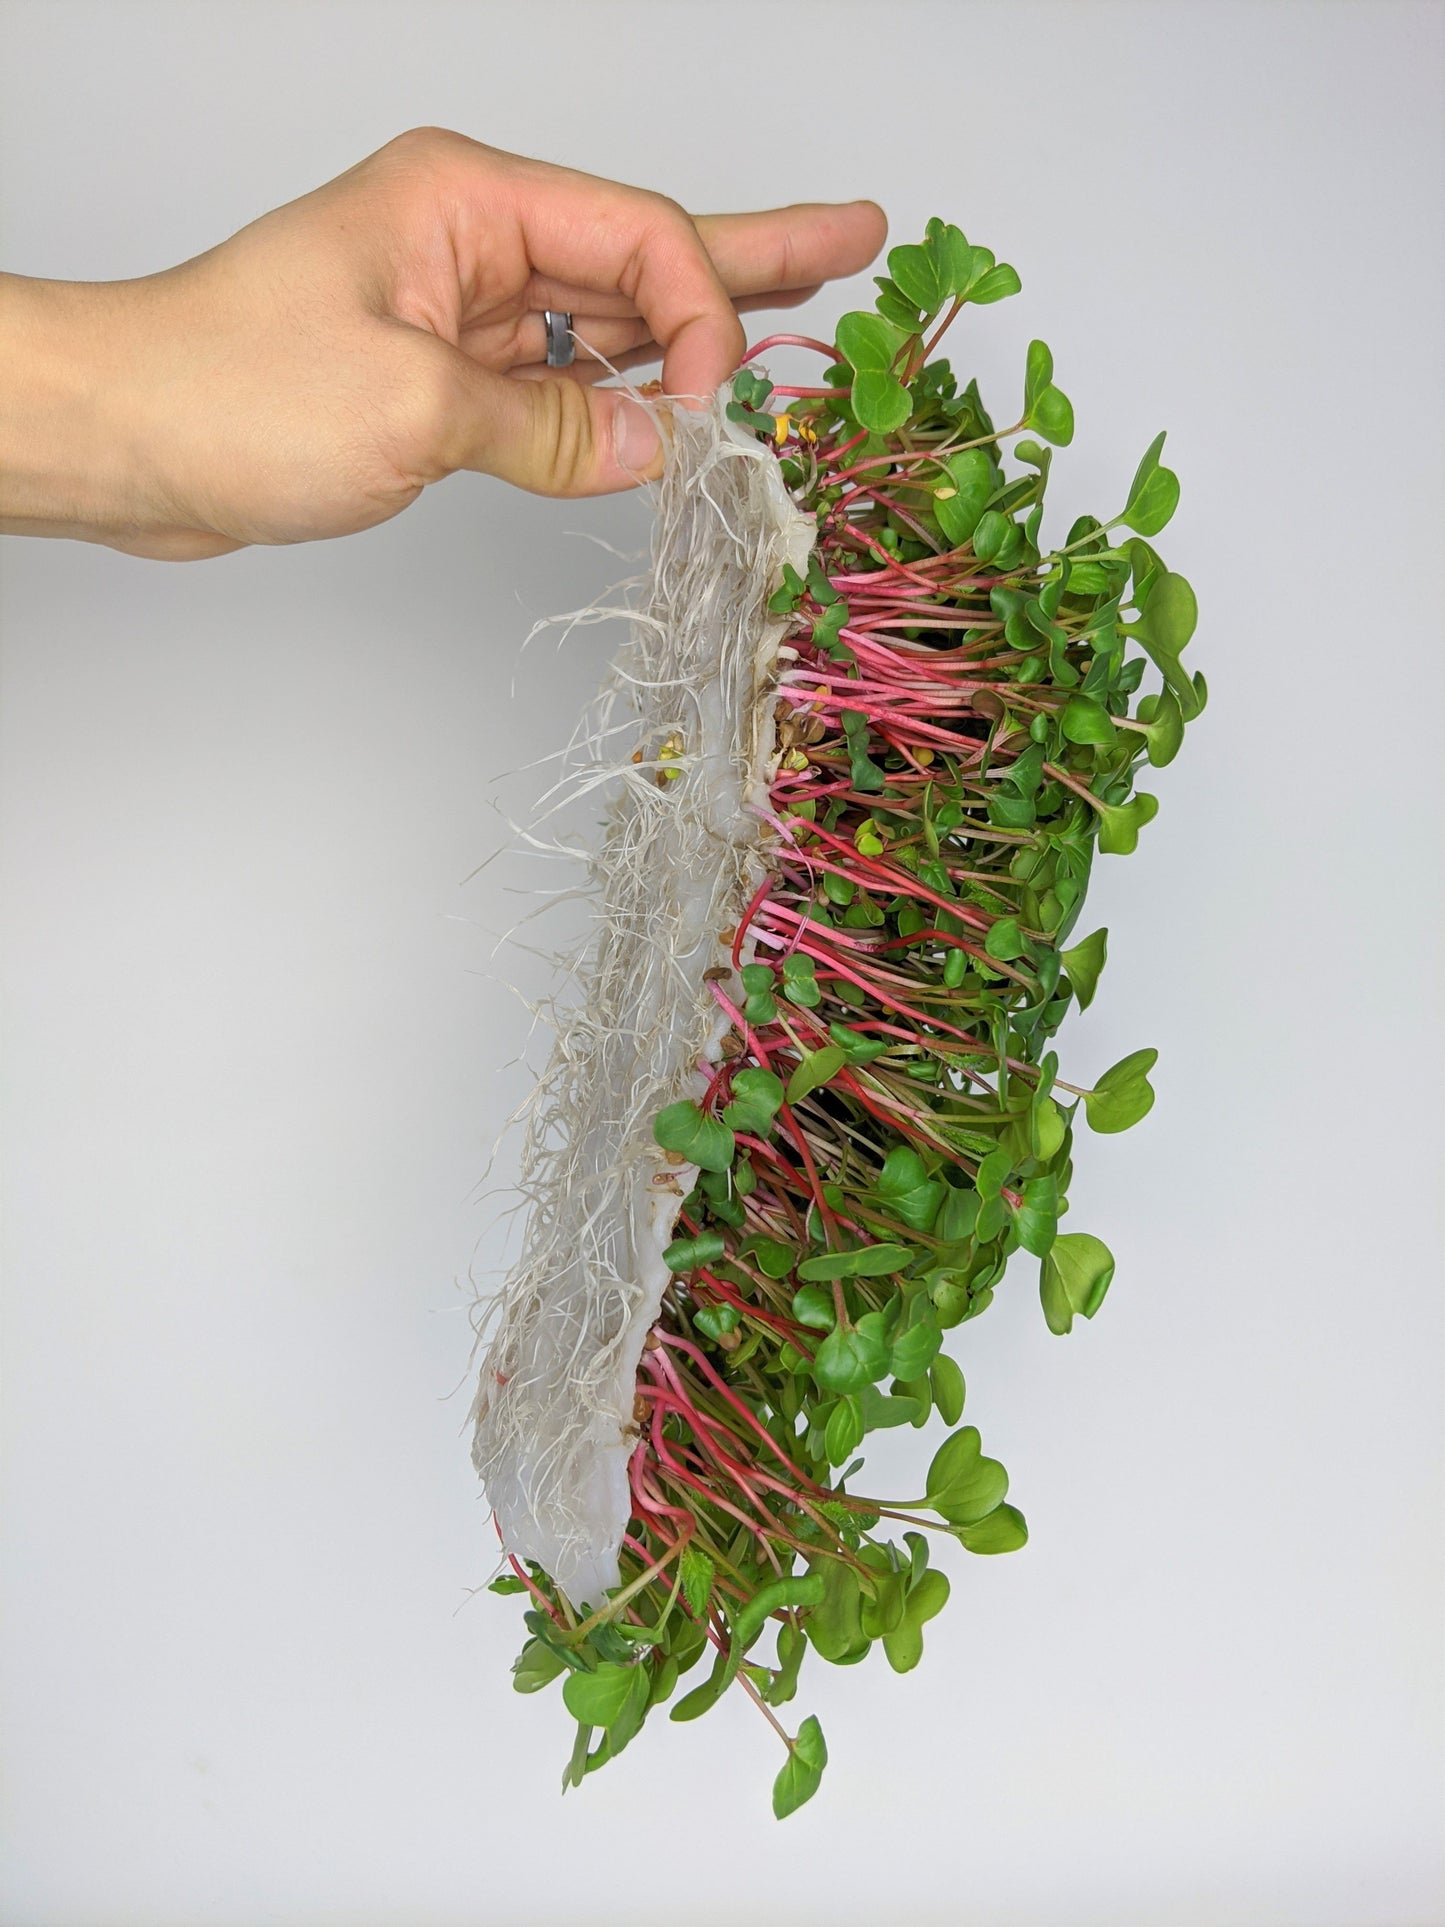 hand holding vegbed bamboo fiber mat with microgreens growing